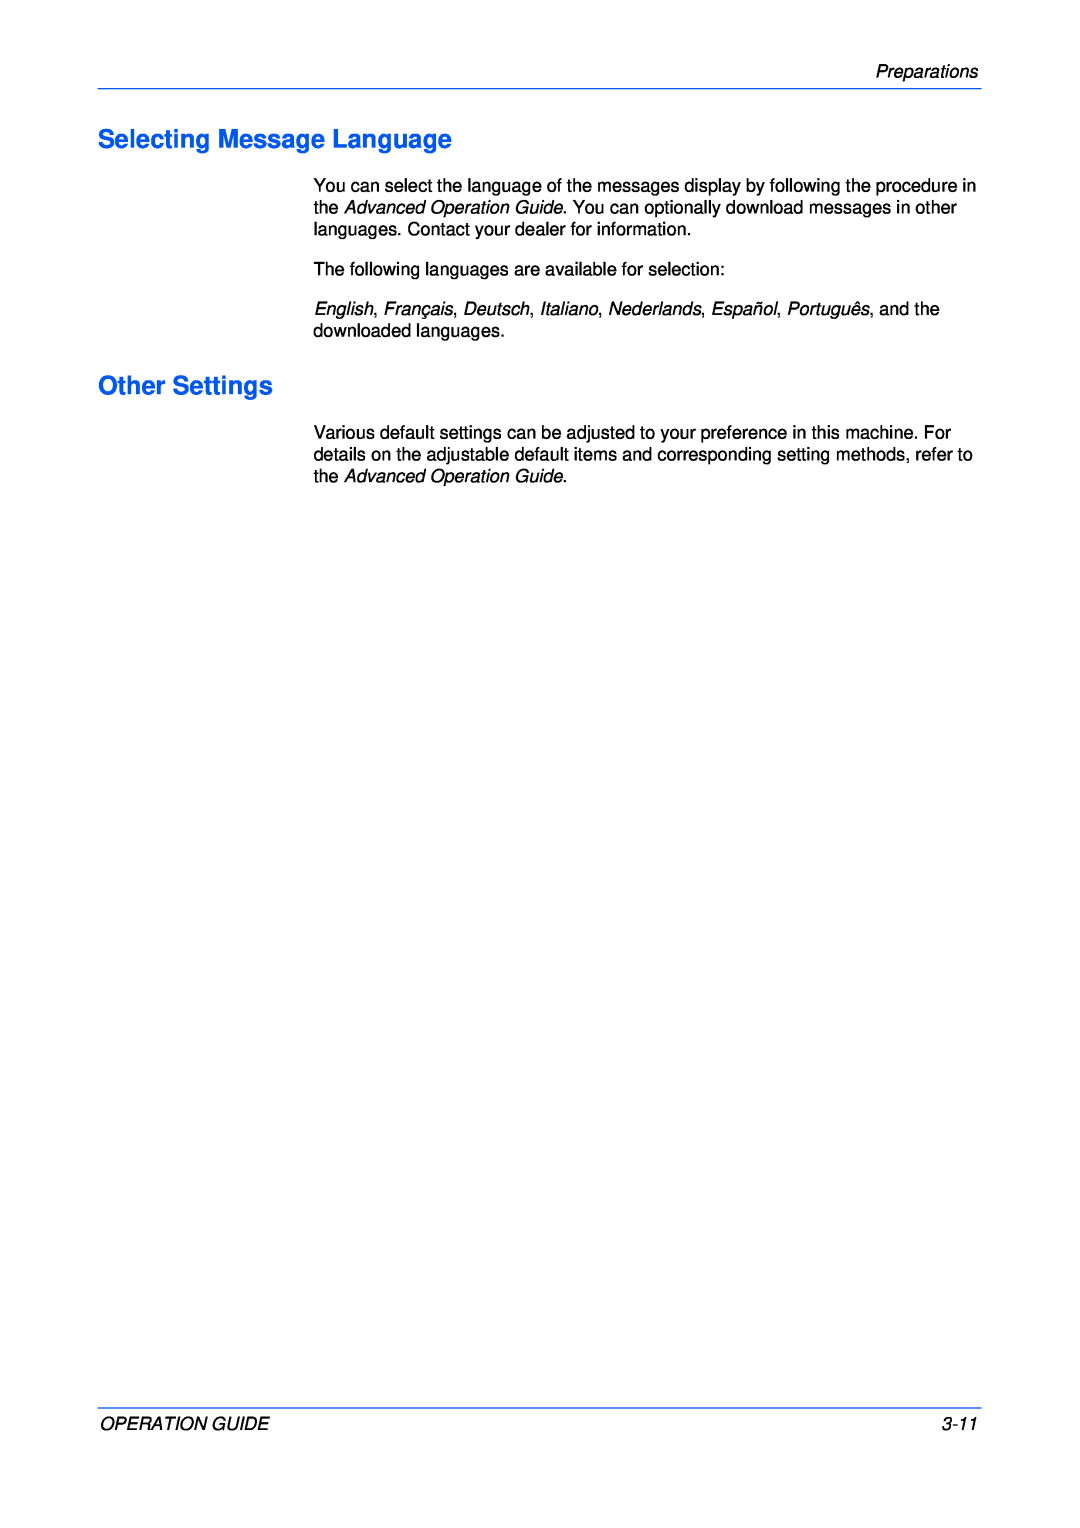 Olivetti 18MF manual Selecting Message Language, Other Settings 